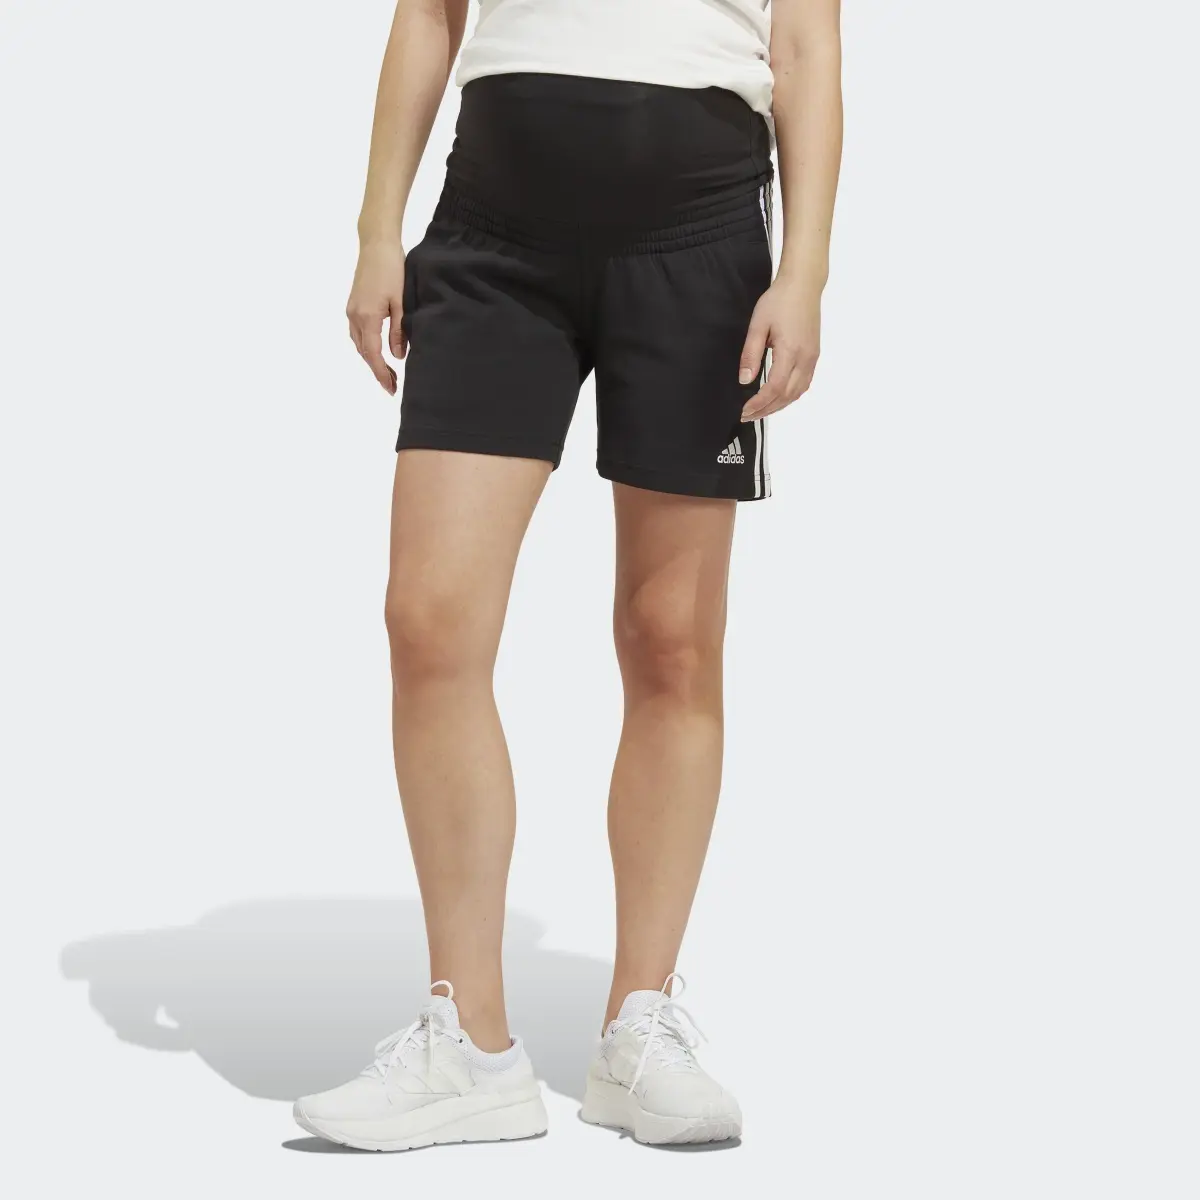 Adidas Maternity Shorts. 1